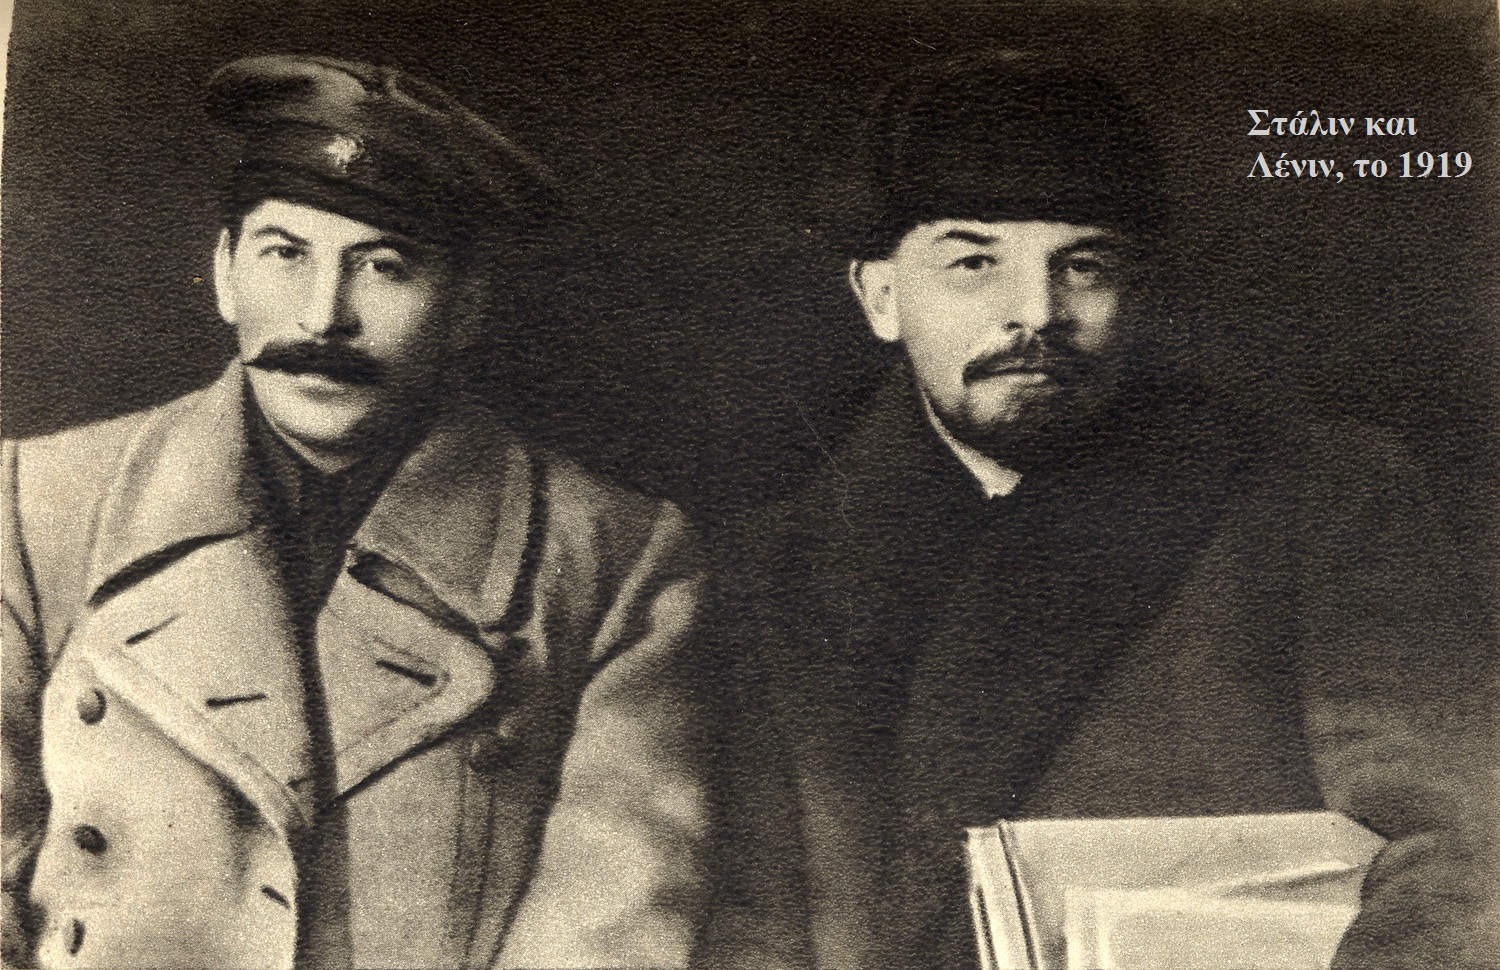 04 1919 Vladimir Lenin and Joseph Stalin 1919